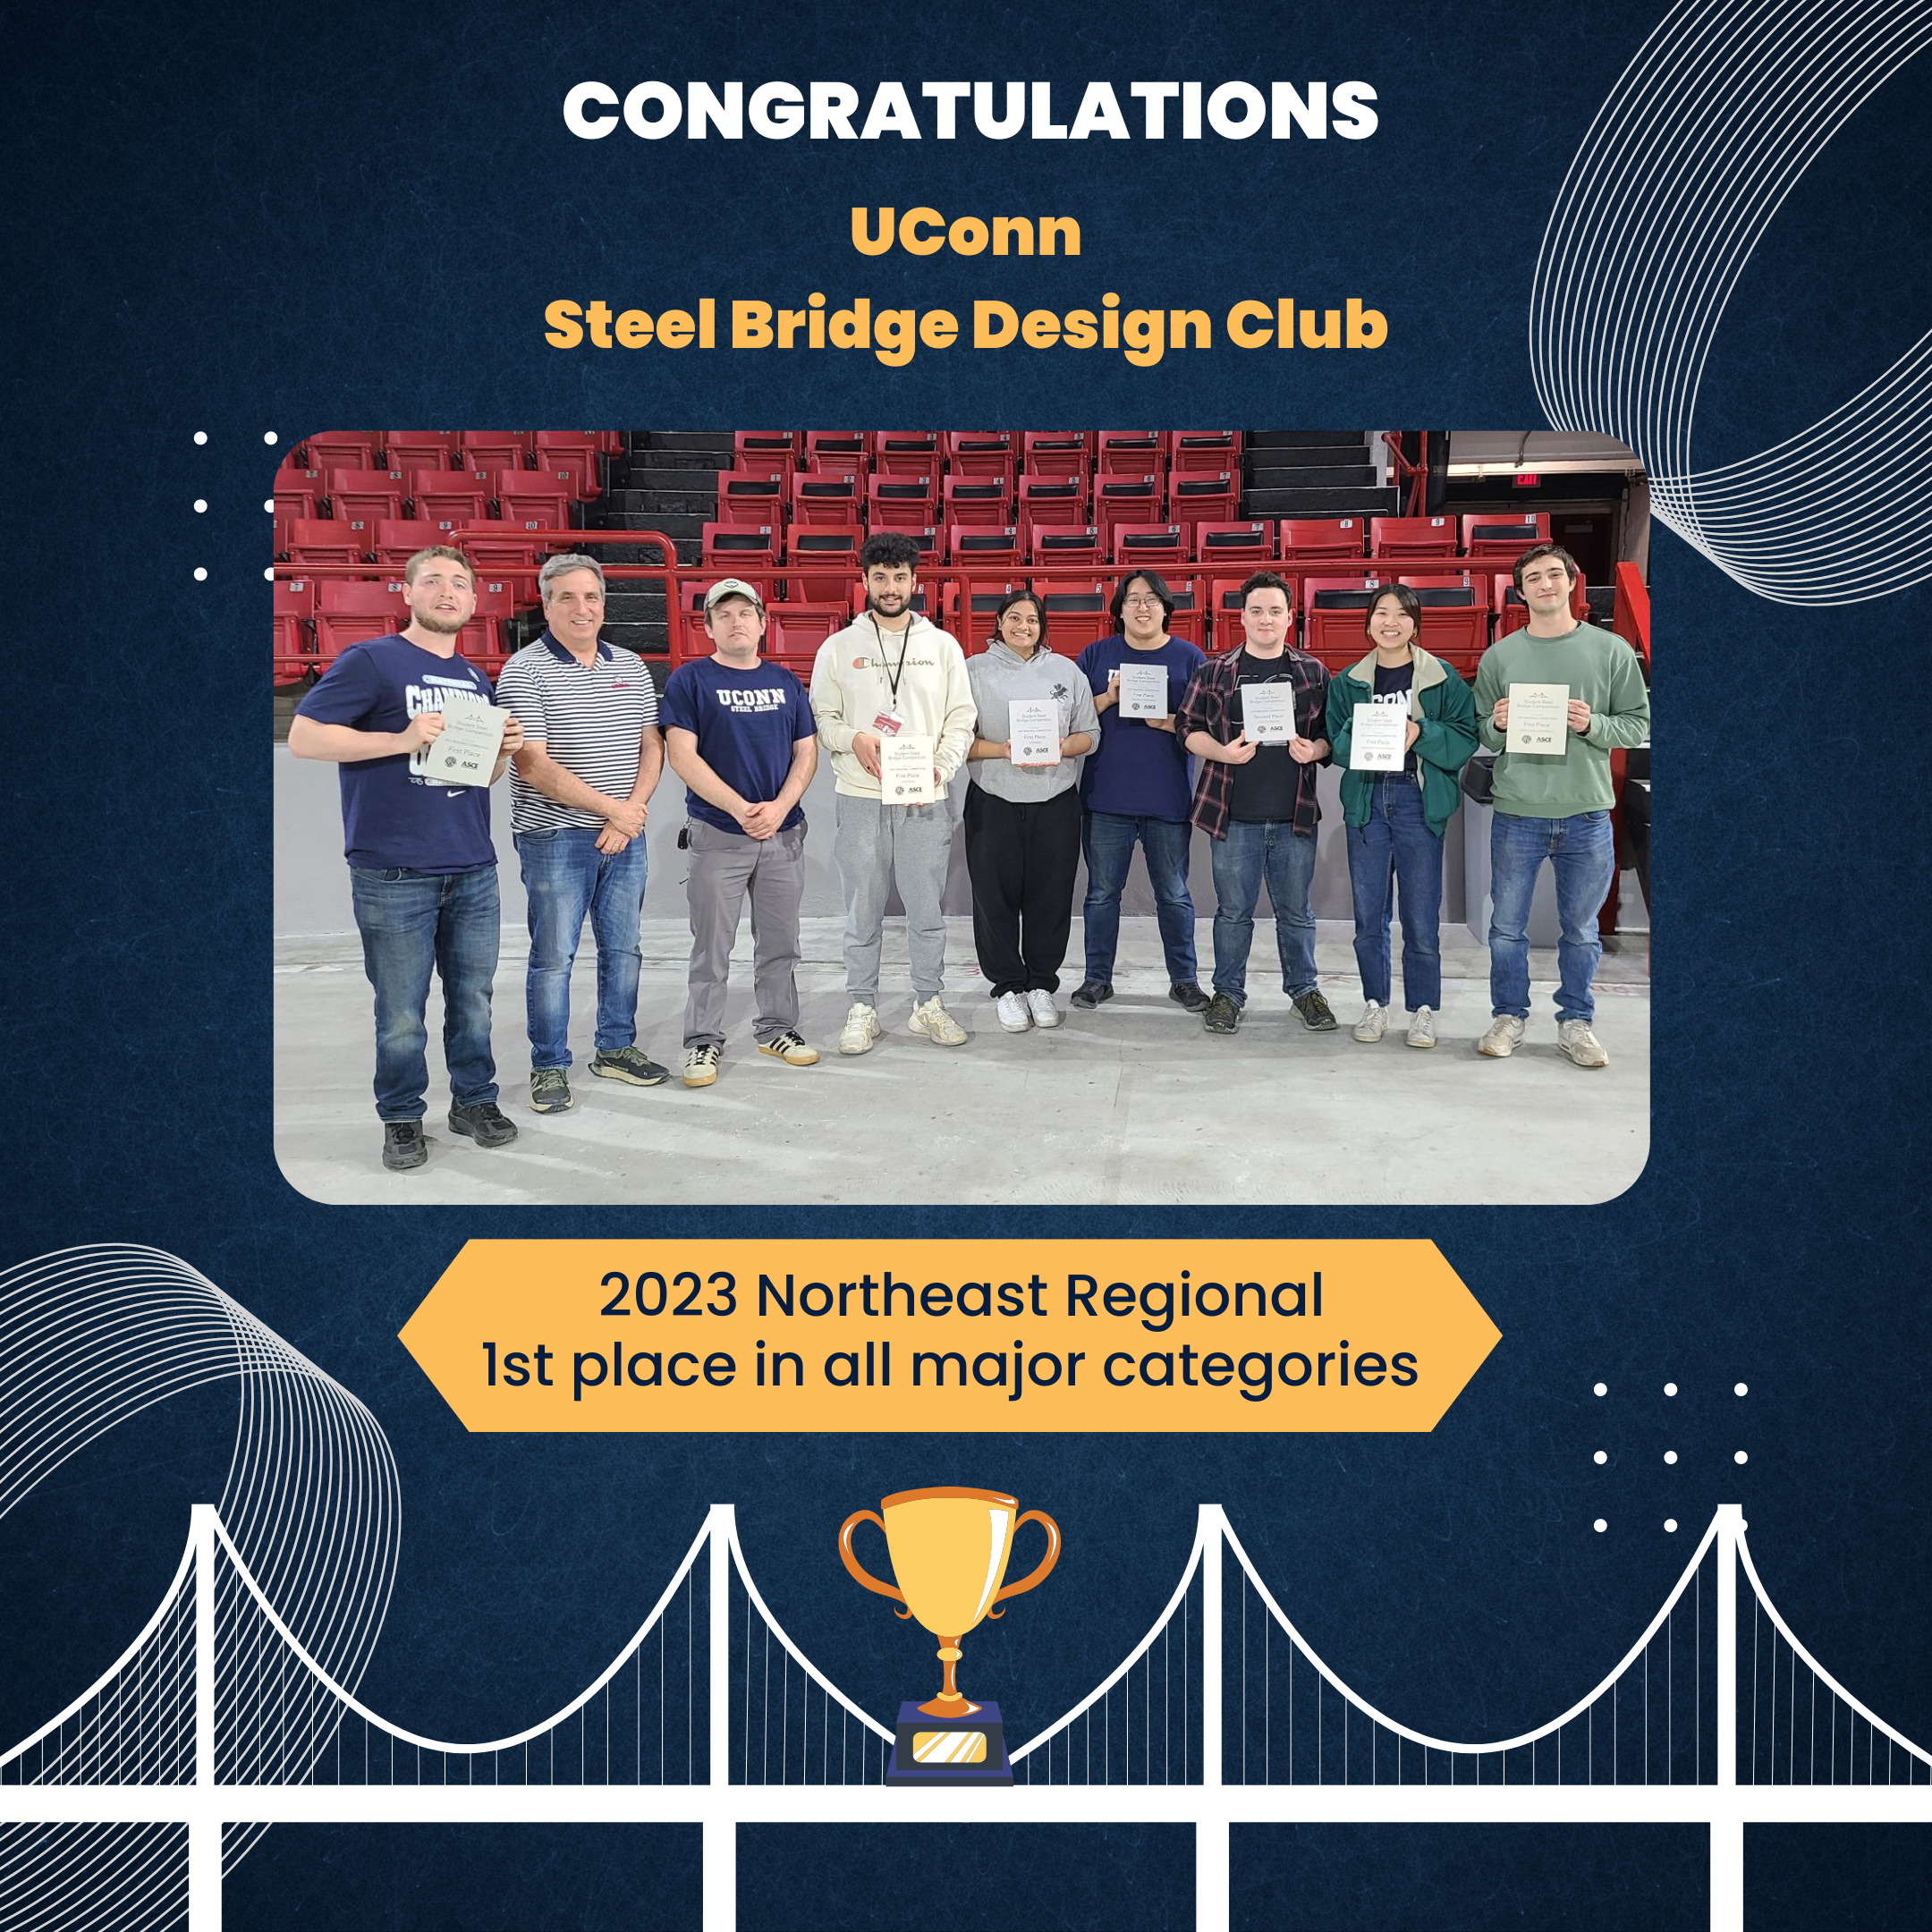 
https://cee.engr.uconn.edu/wp-content/uploads/2023/04/Steel-bridge-design-club-victory.png
